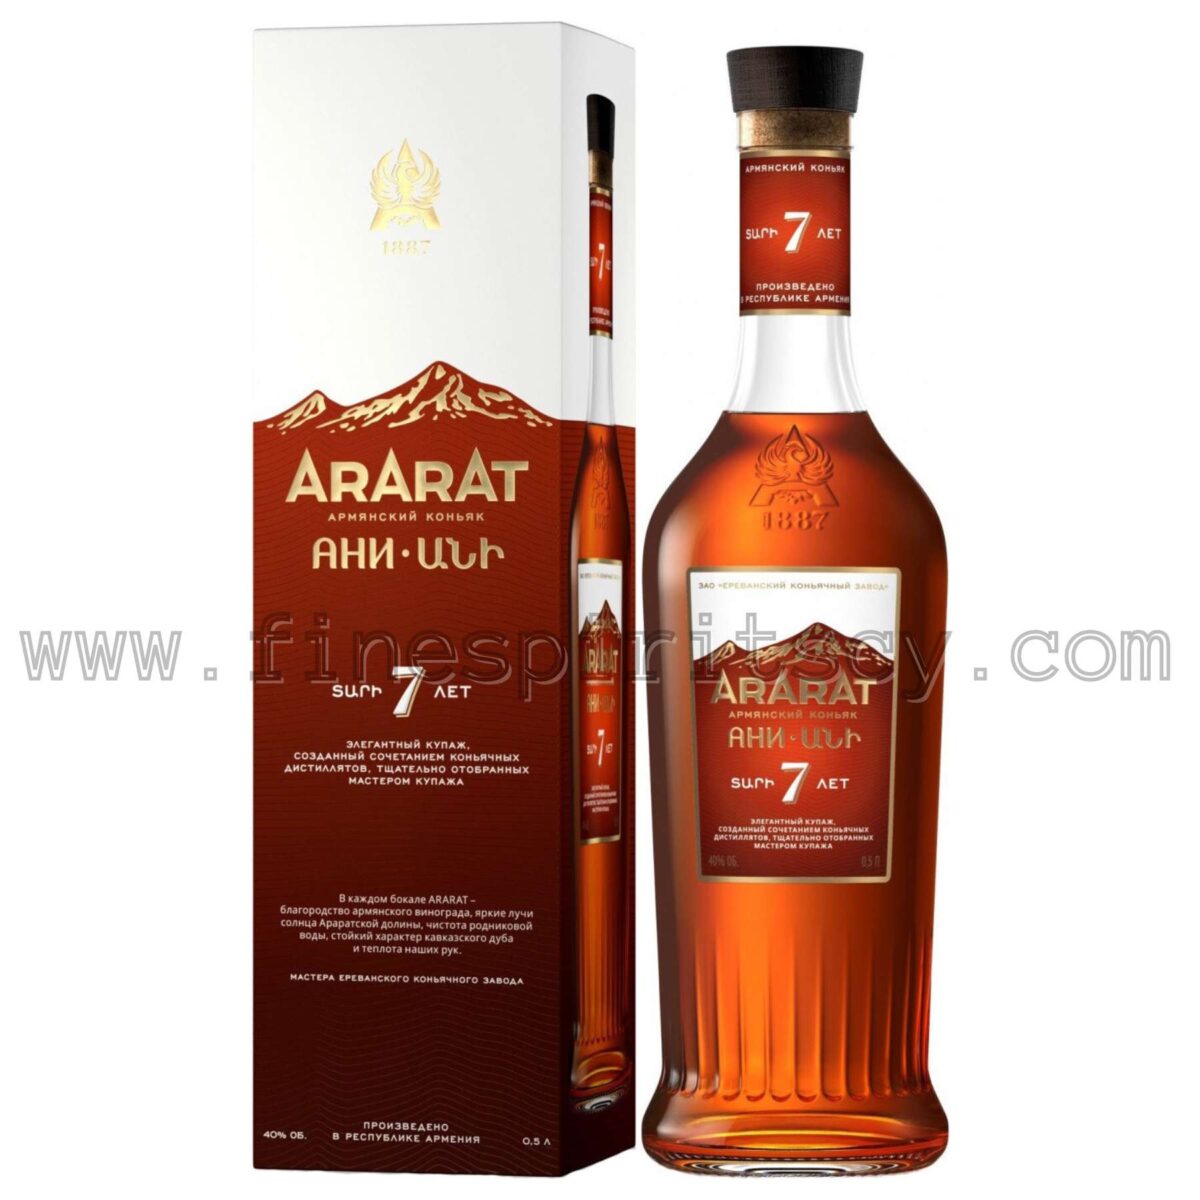 Ararat 7 Year Old Ani Brandy Cyprus Price Fine Spirits FSCY Price Online Order